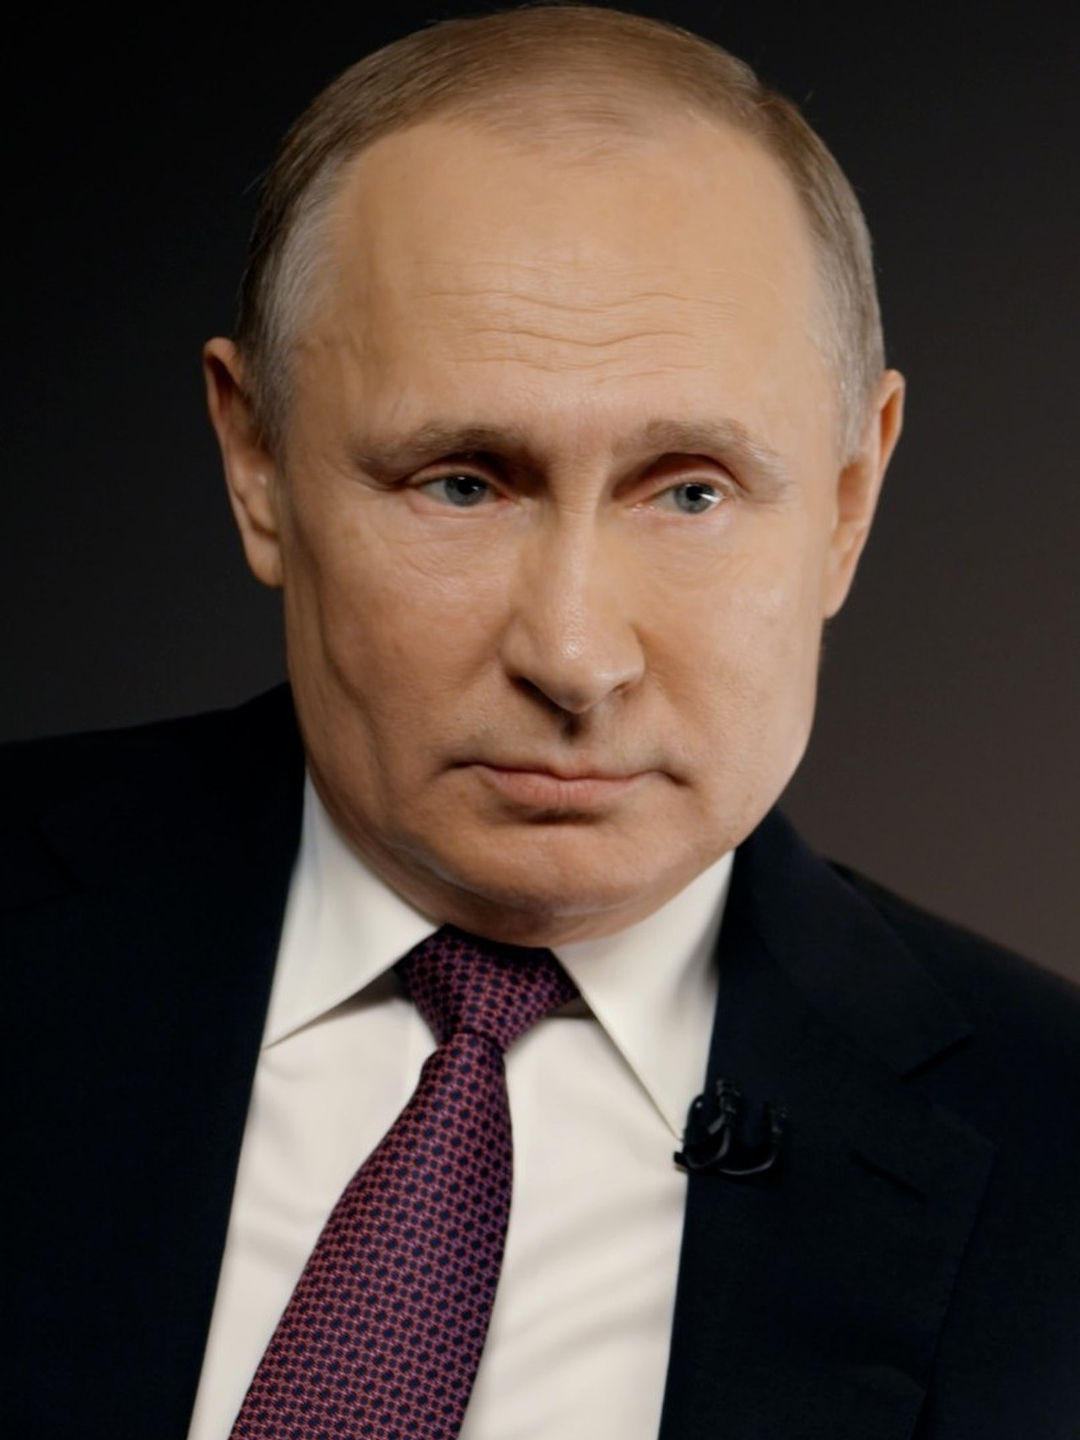 Vladimir Putin who is his father